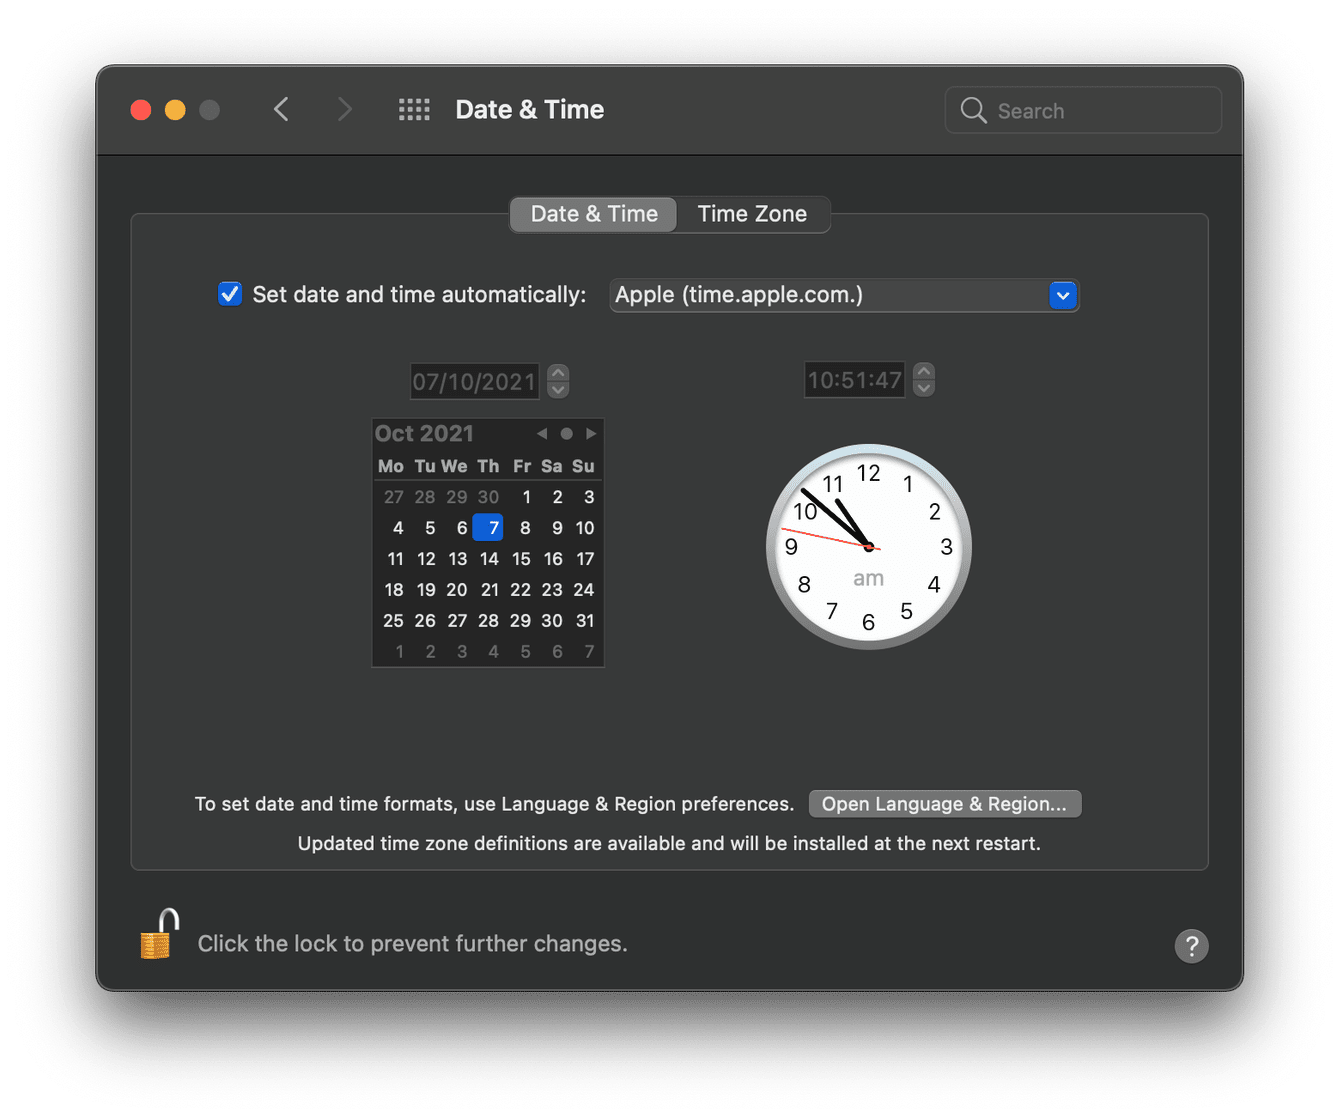 Date & Time settings on Mac